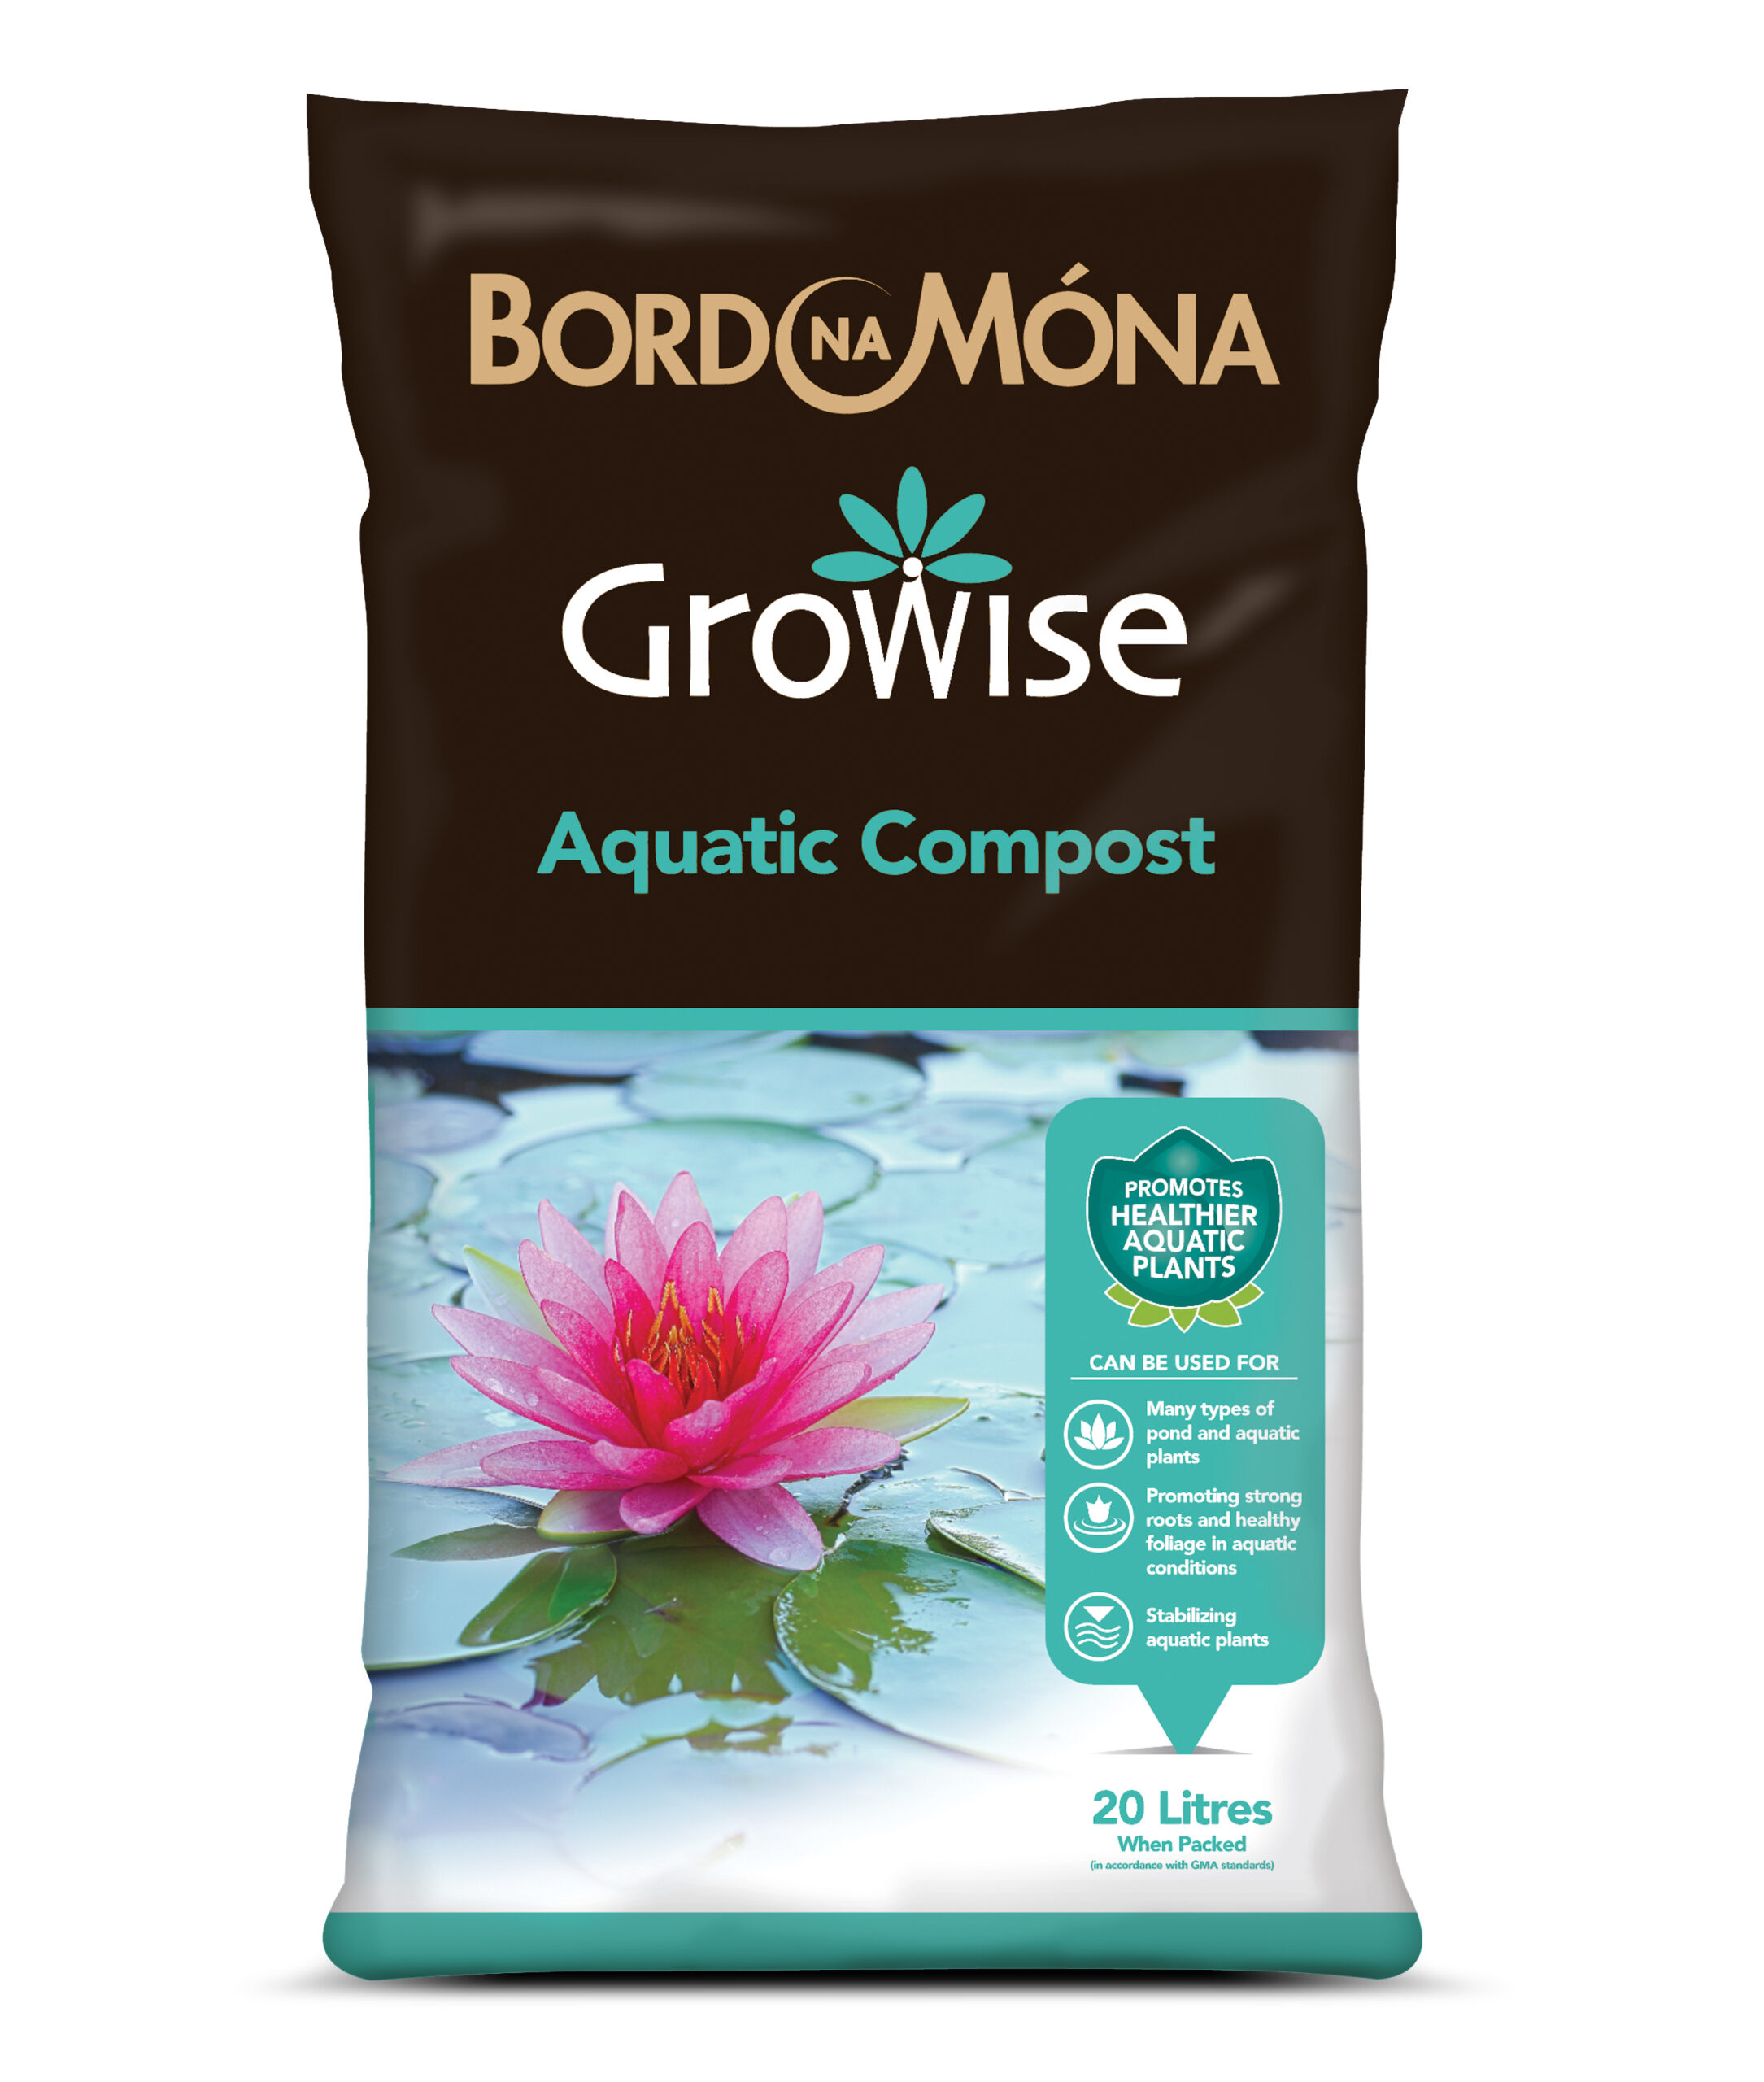 Bordnamona Growise Aquatic Compost 20L